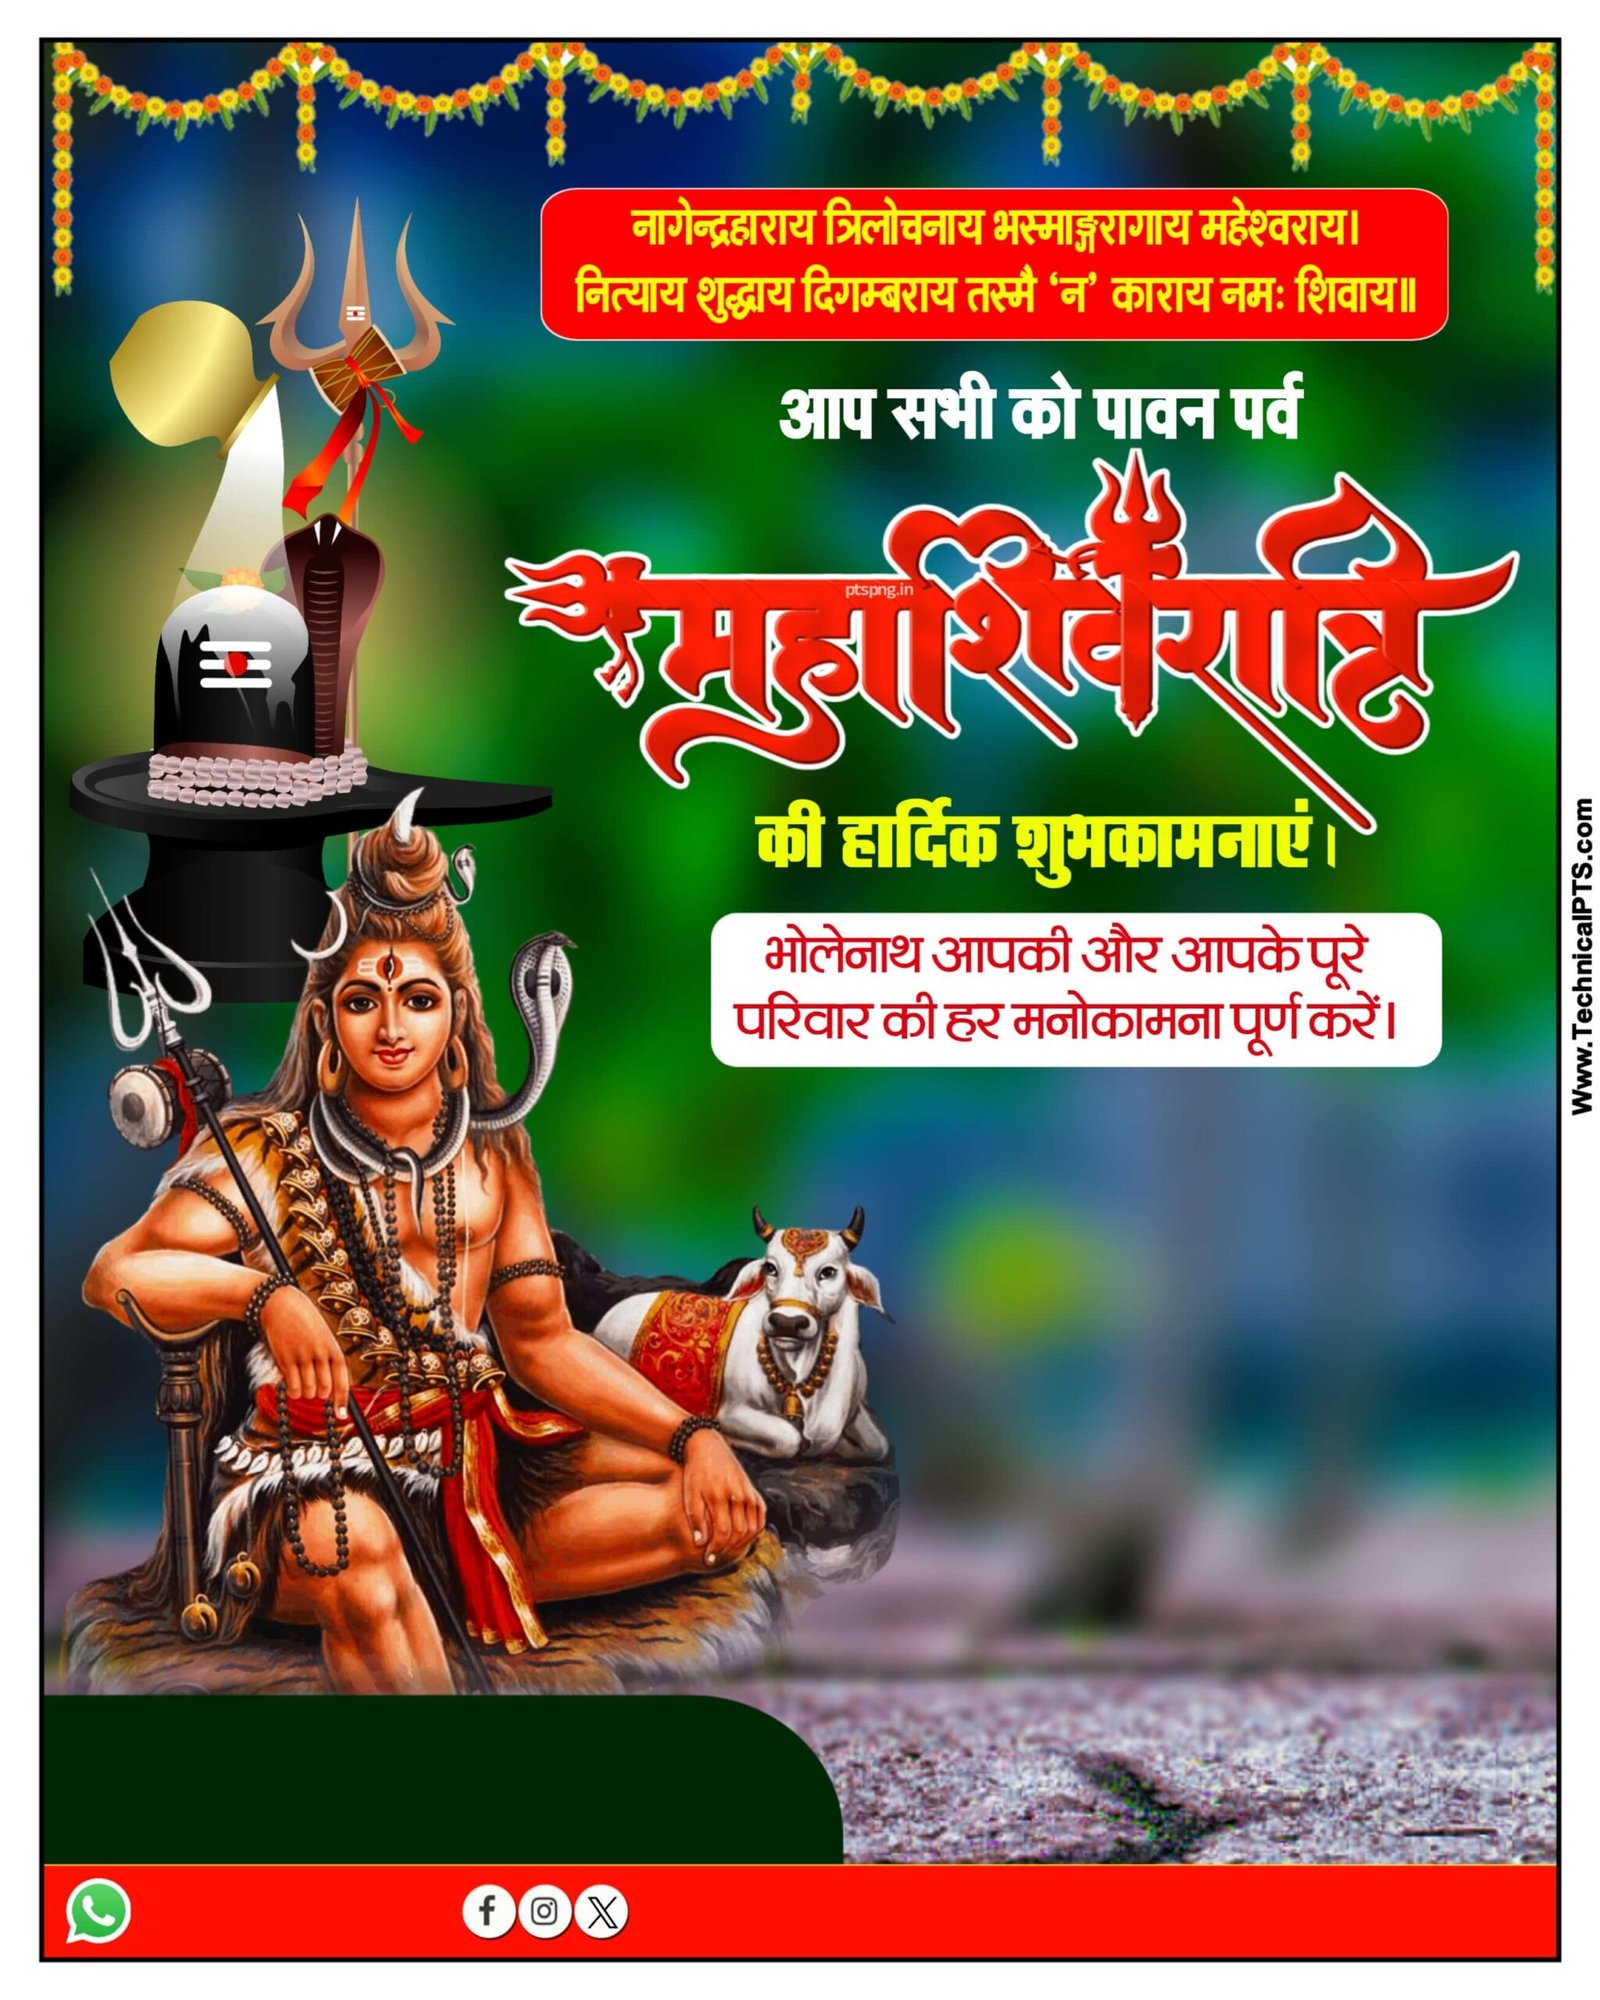 महाशिवरात्रि का पोस्टर कैसे बनाएं मोबाइल से| Mahashivratri banner editing PNG background download| Mahashivratri poster